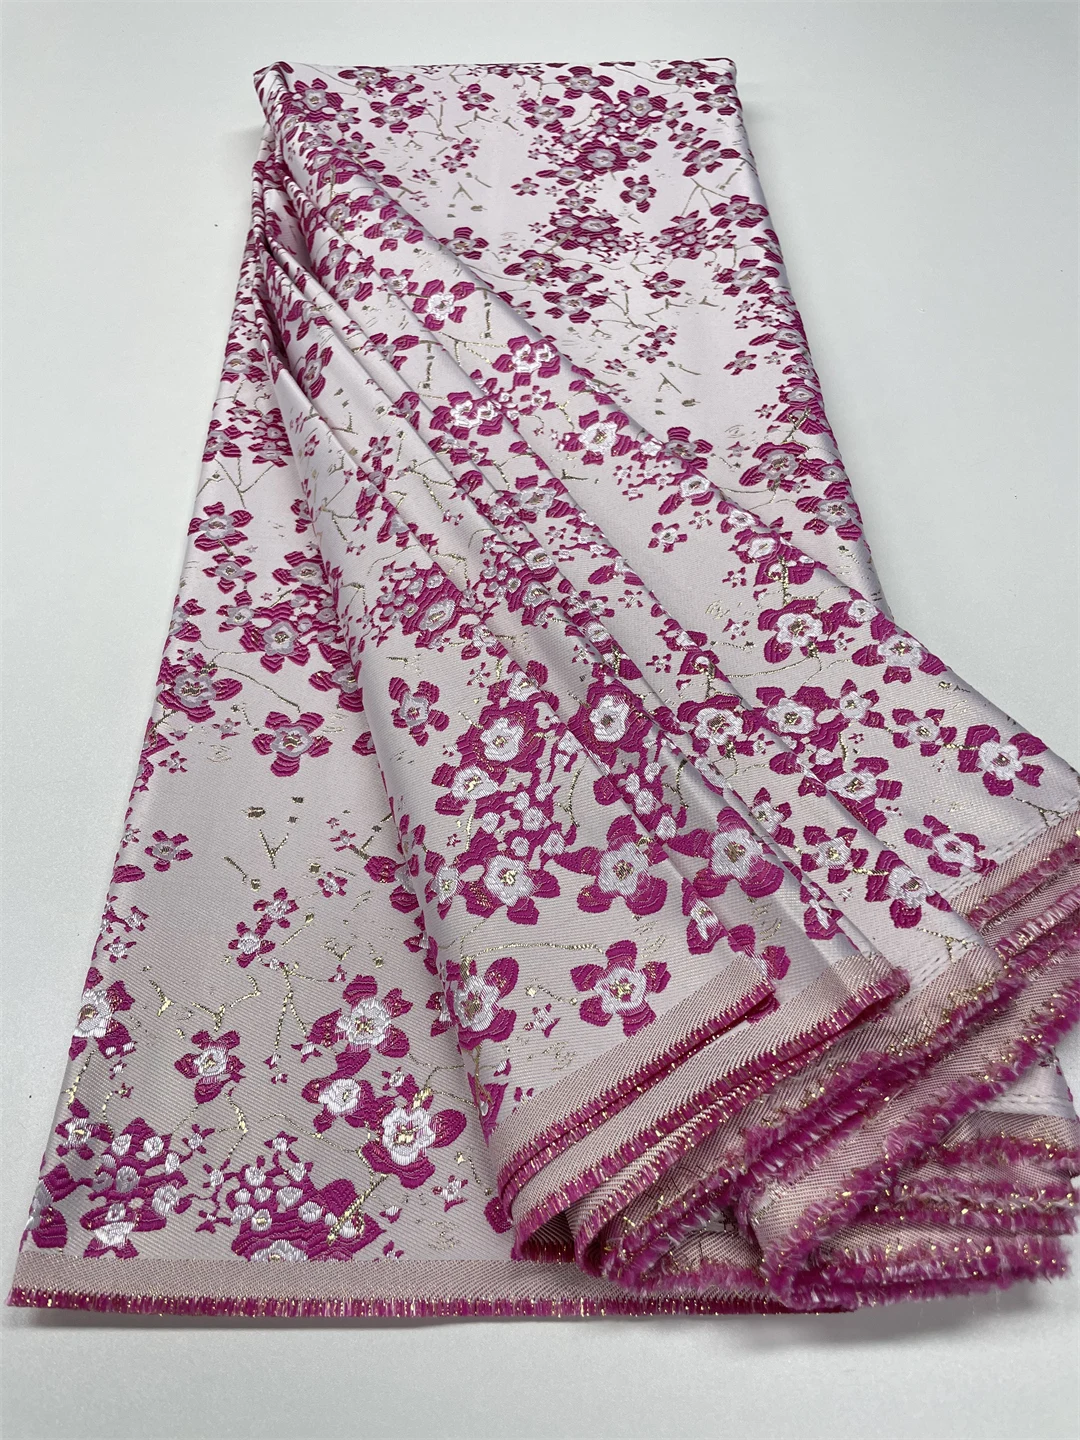 Fushia Jacquard Fabric High Quality Brocade Lace 5 Yards Nigerian Damask Fabric for Women Dresses Sew African Cloth Materials